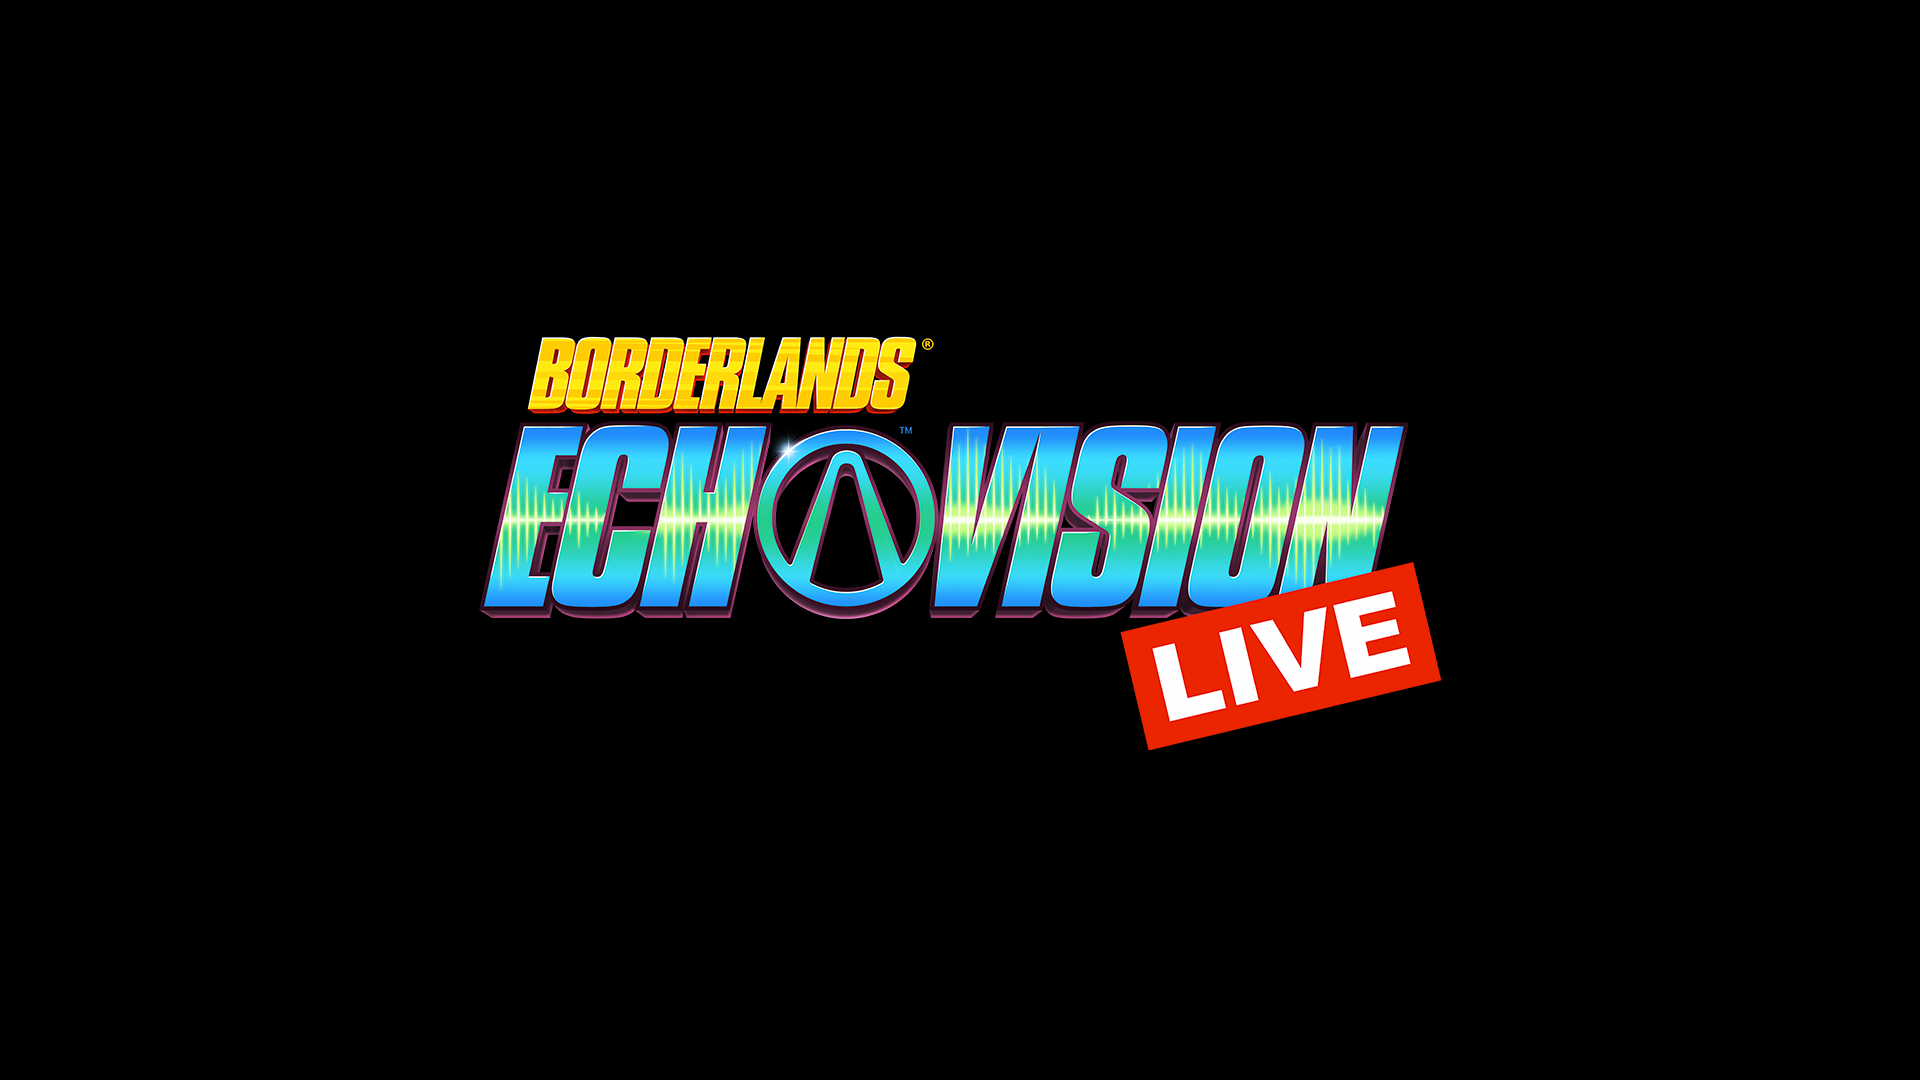 Borderlands EchoVision Live ANNOUNCED